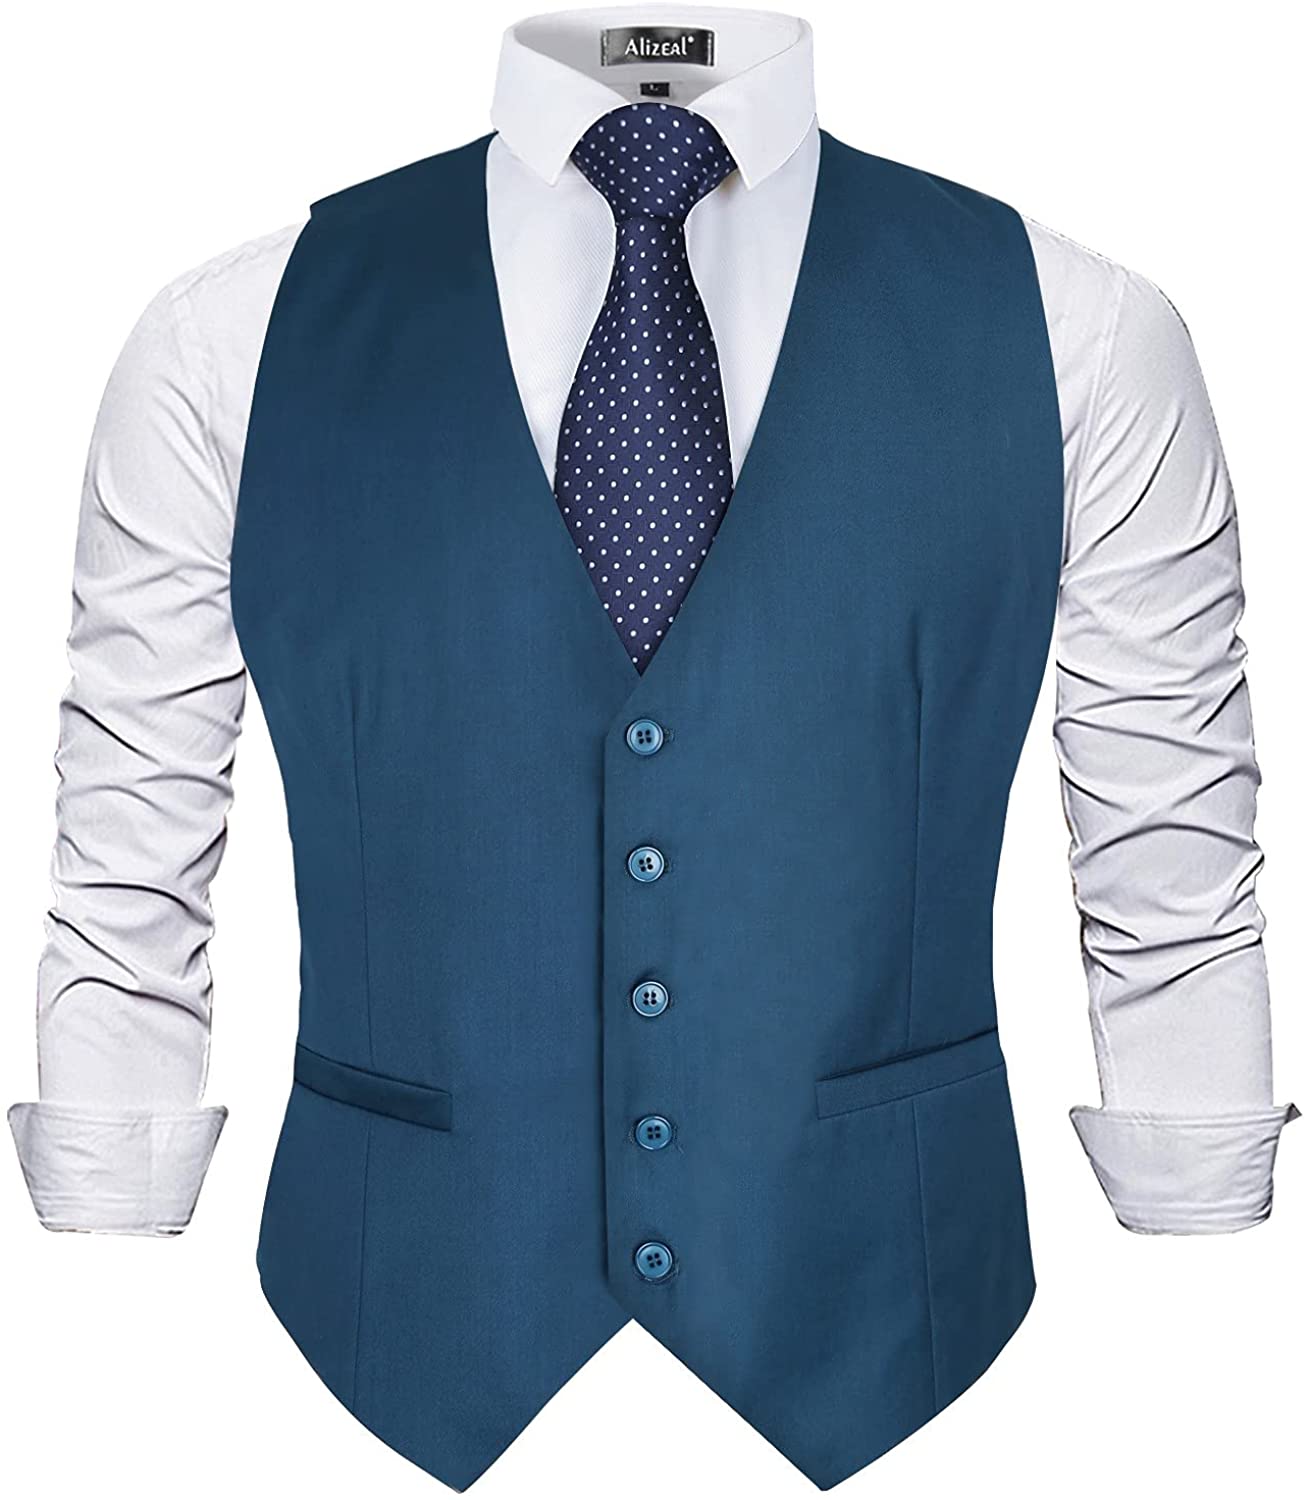 Alizeal Mens Classic Solid Color Business Suit Vest Regular Fit Tuxedo Waistcoat